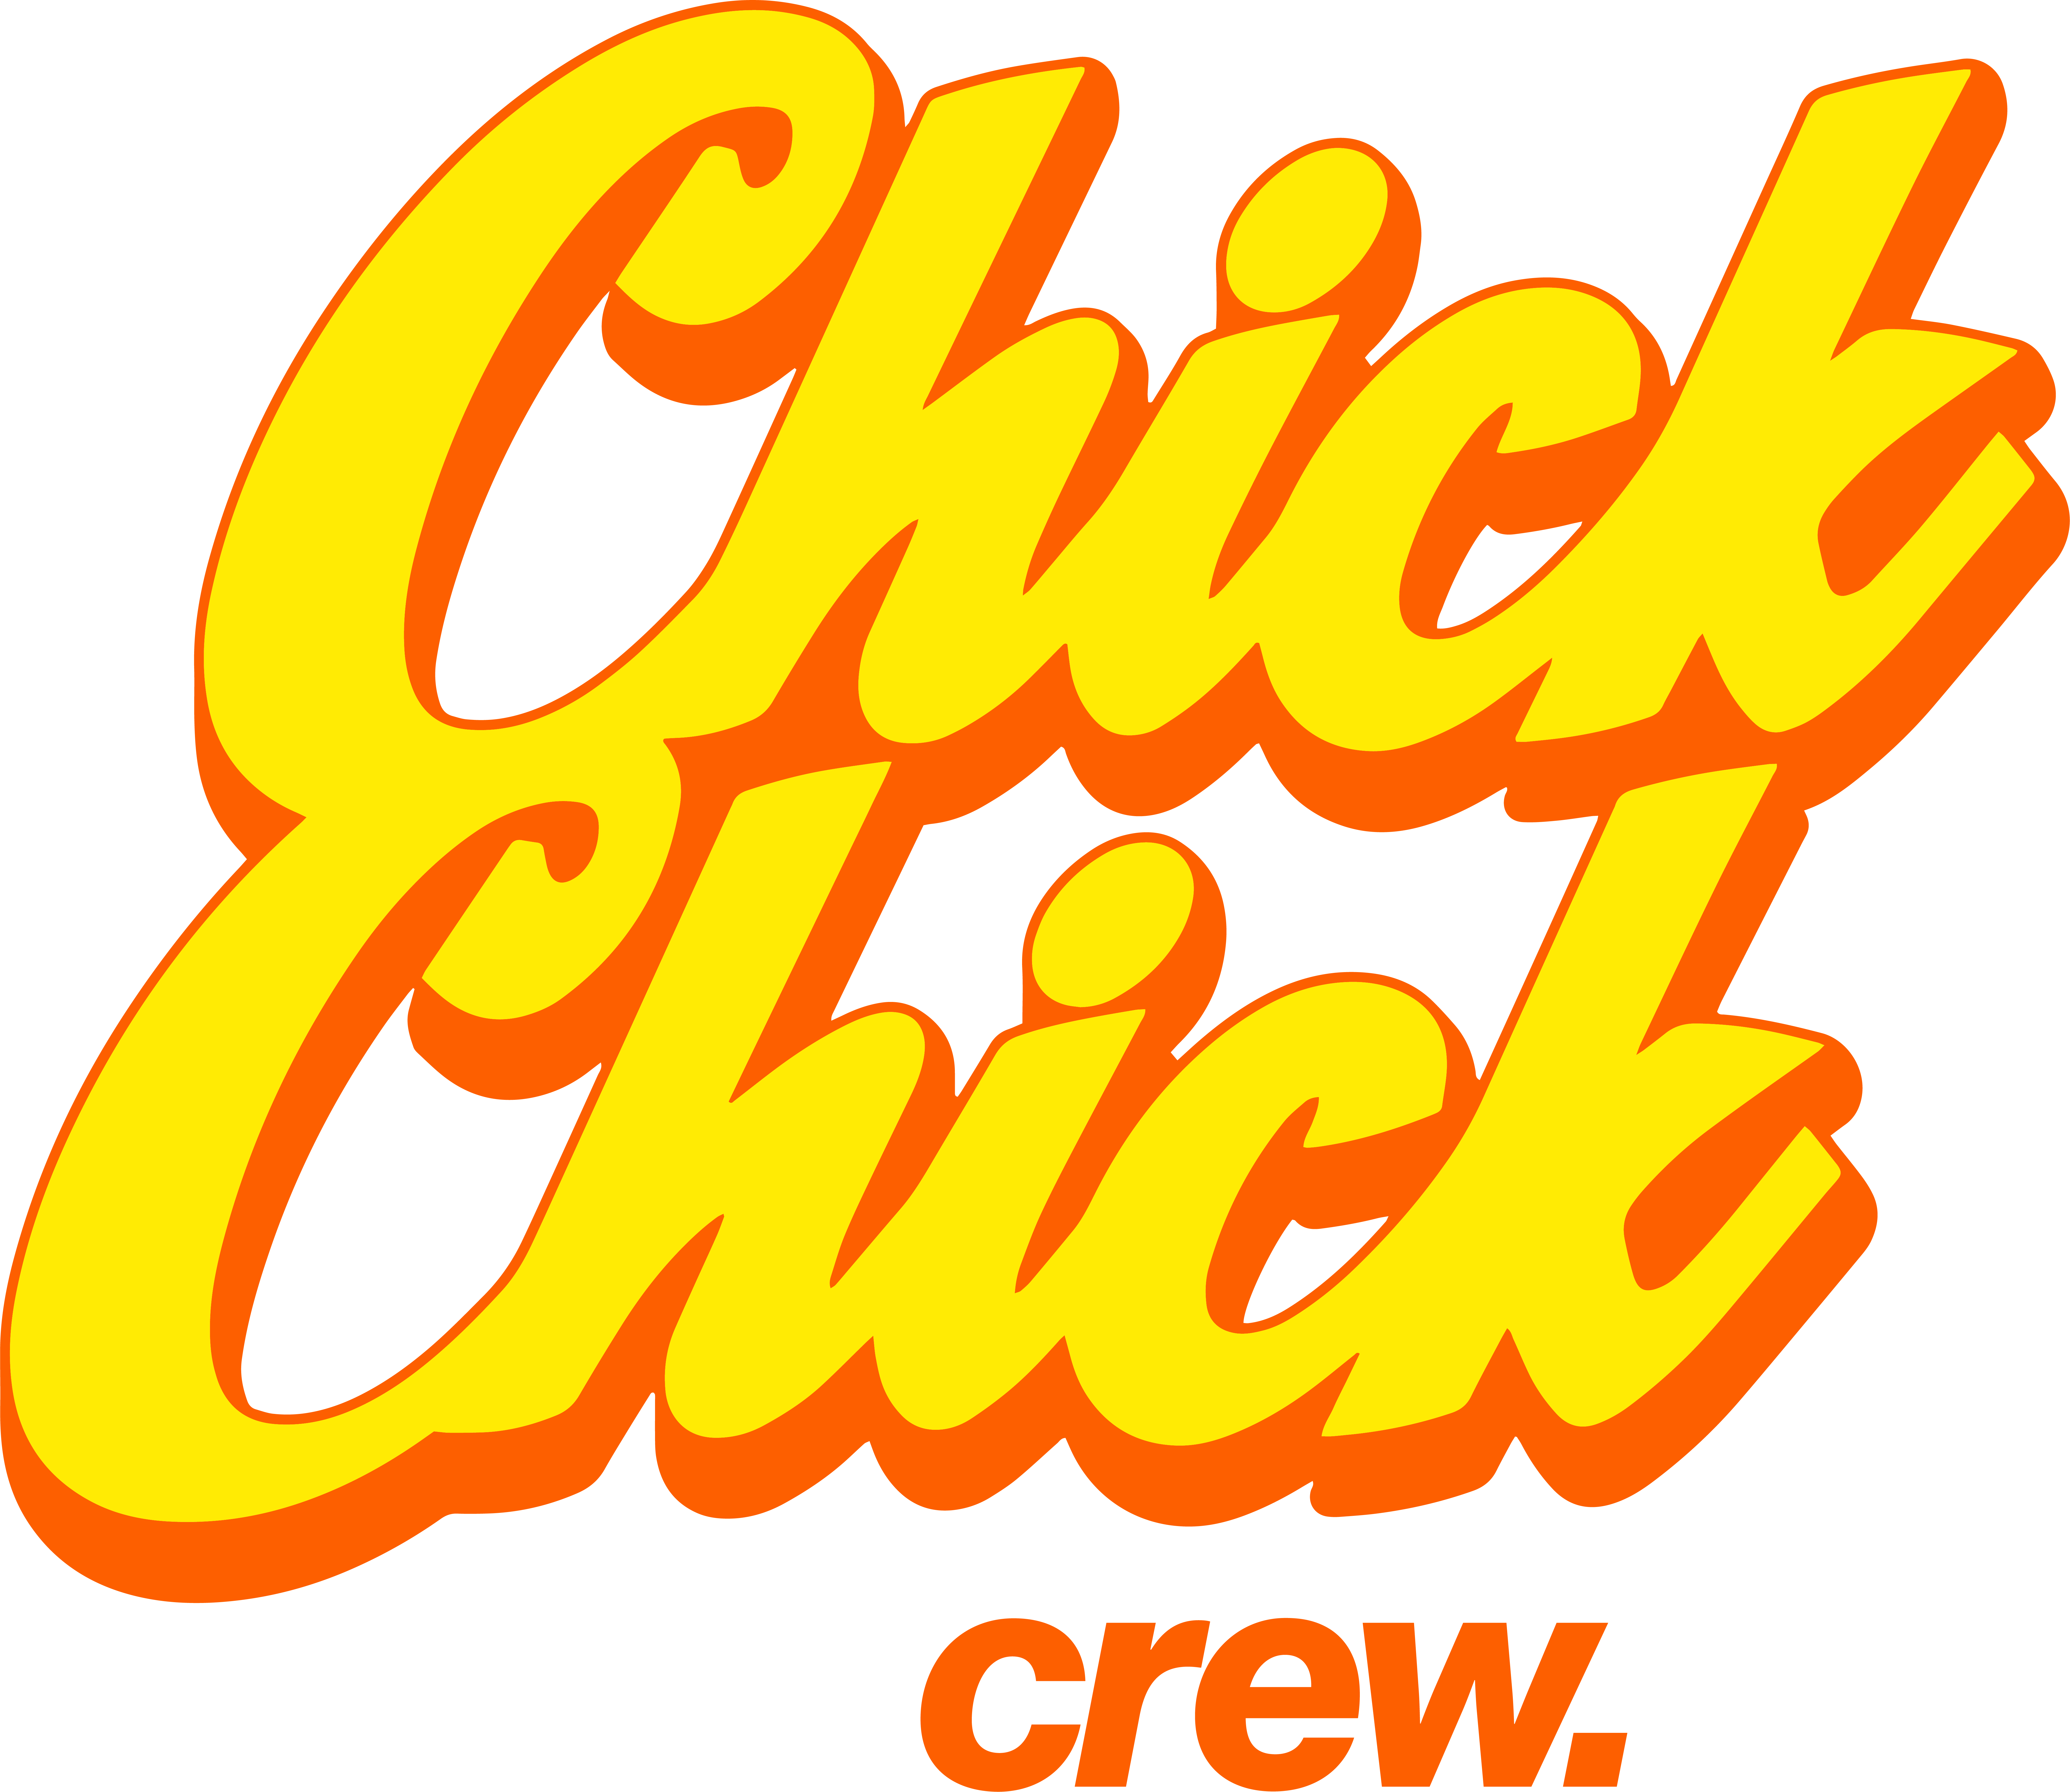 chick chick crew logo